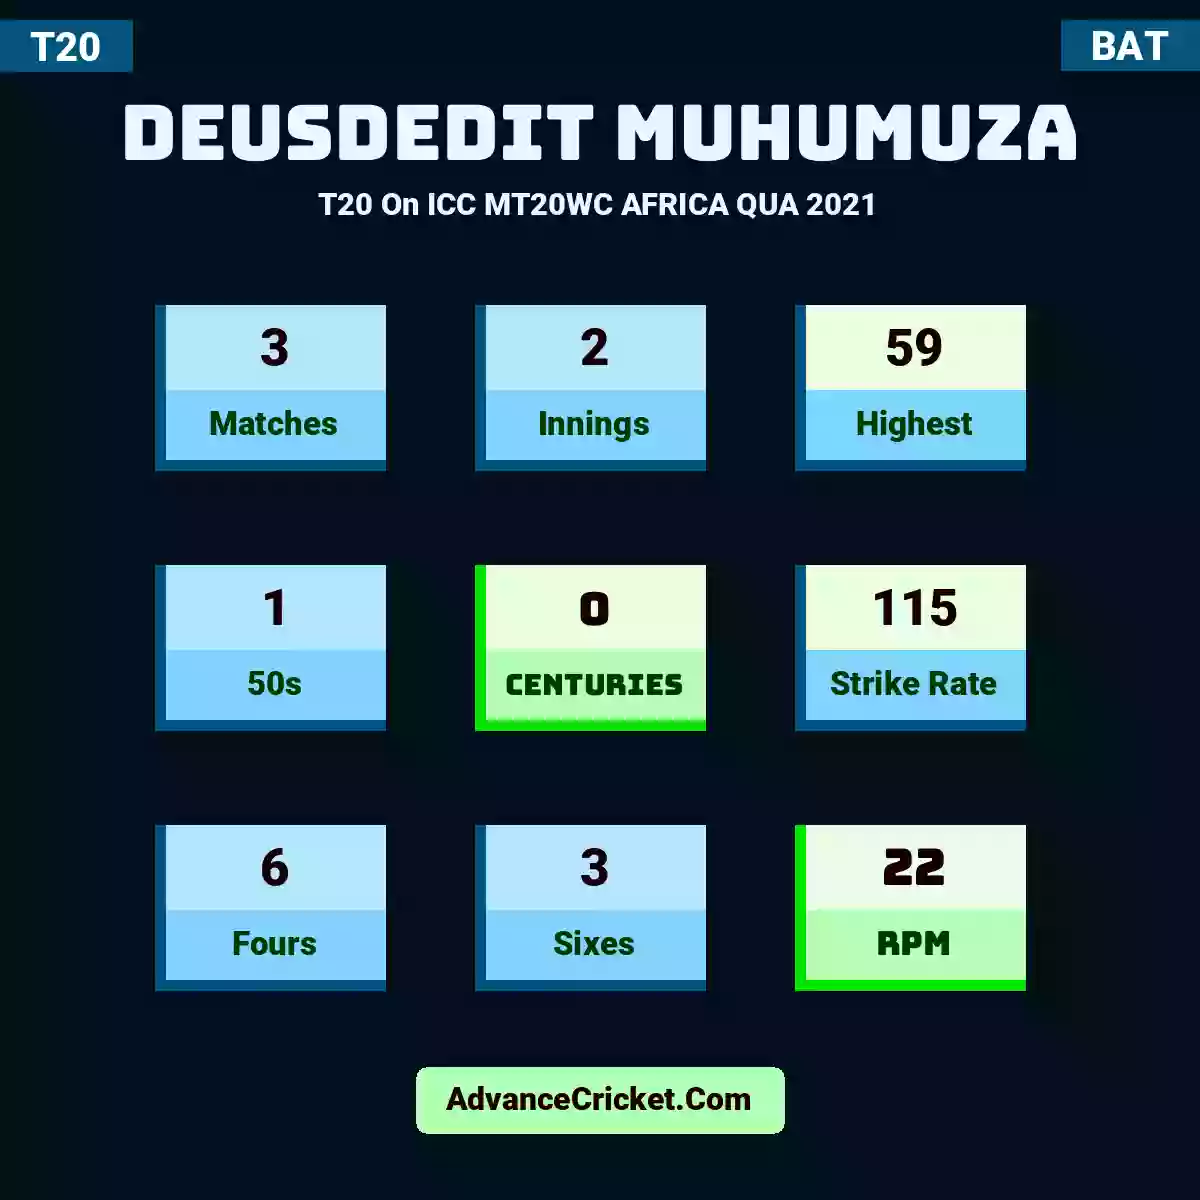 Deusdedit Muhumuza T20  On ICC MT20WC AFRICA QUA 2021, Deusdedit Muhumuza played 3 matches, scored 59 runs as highest, 1 half-centuries, and 0 centuries, with a strike rate of 115. D.Muhumuza hit 6 fours and 3 sixes, with an RPM of 22.